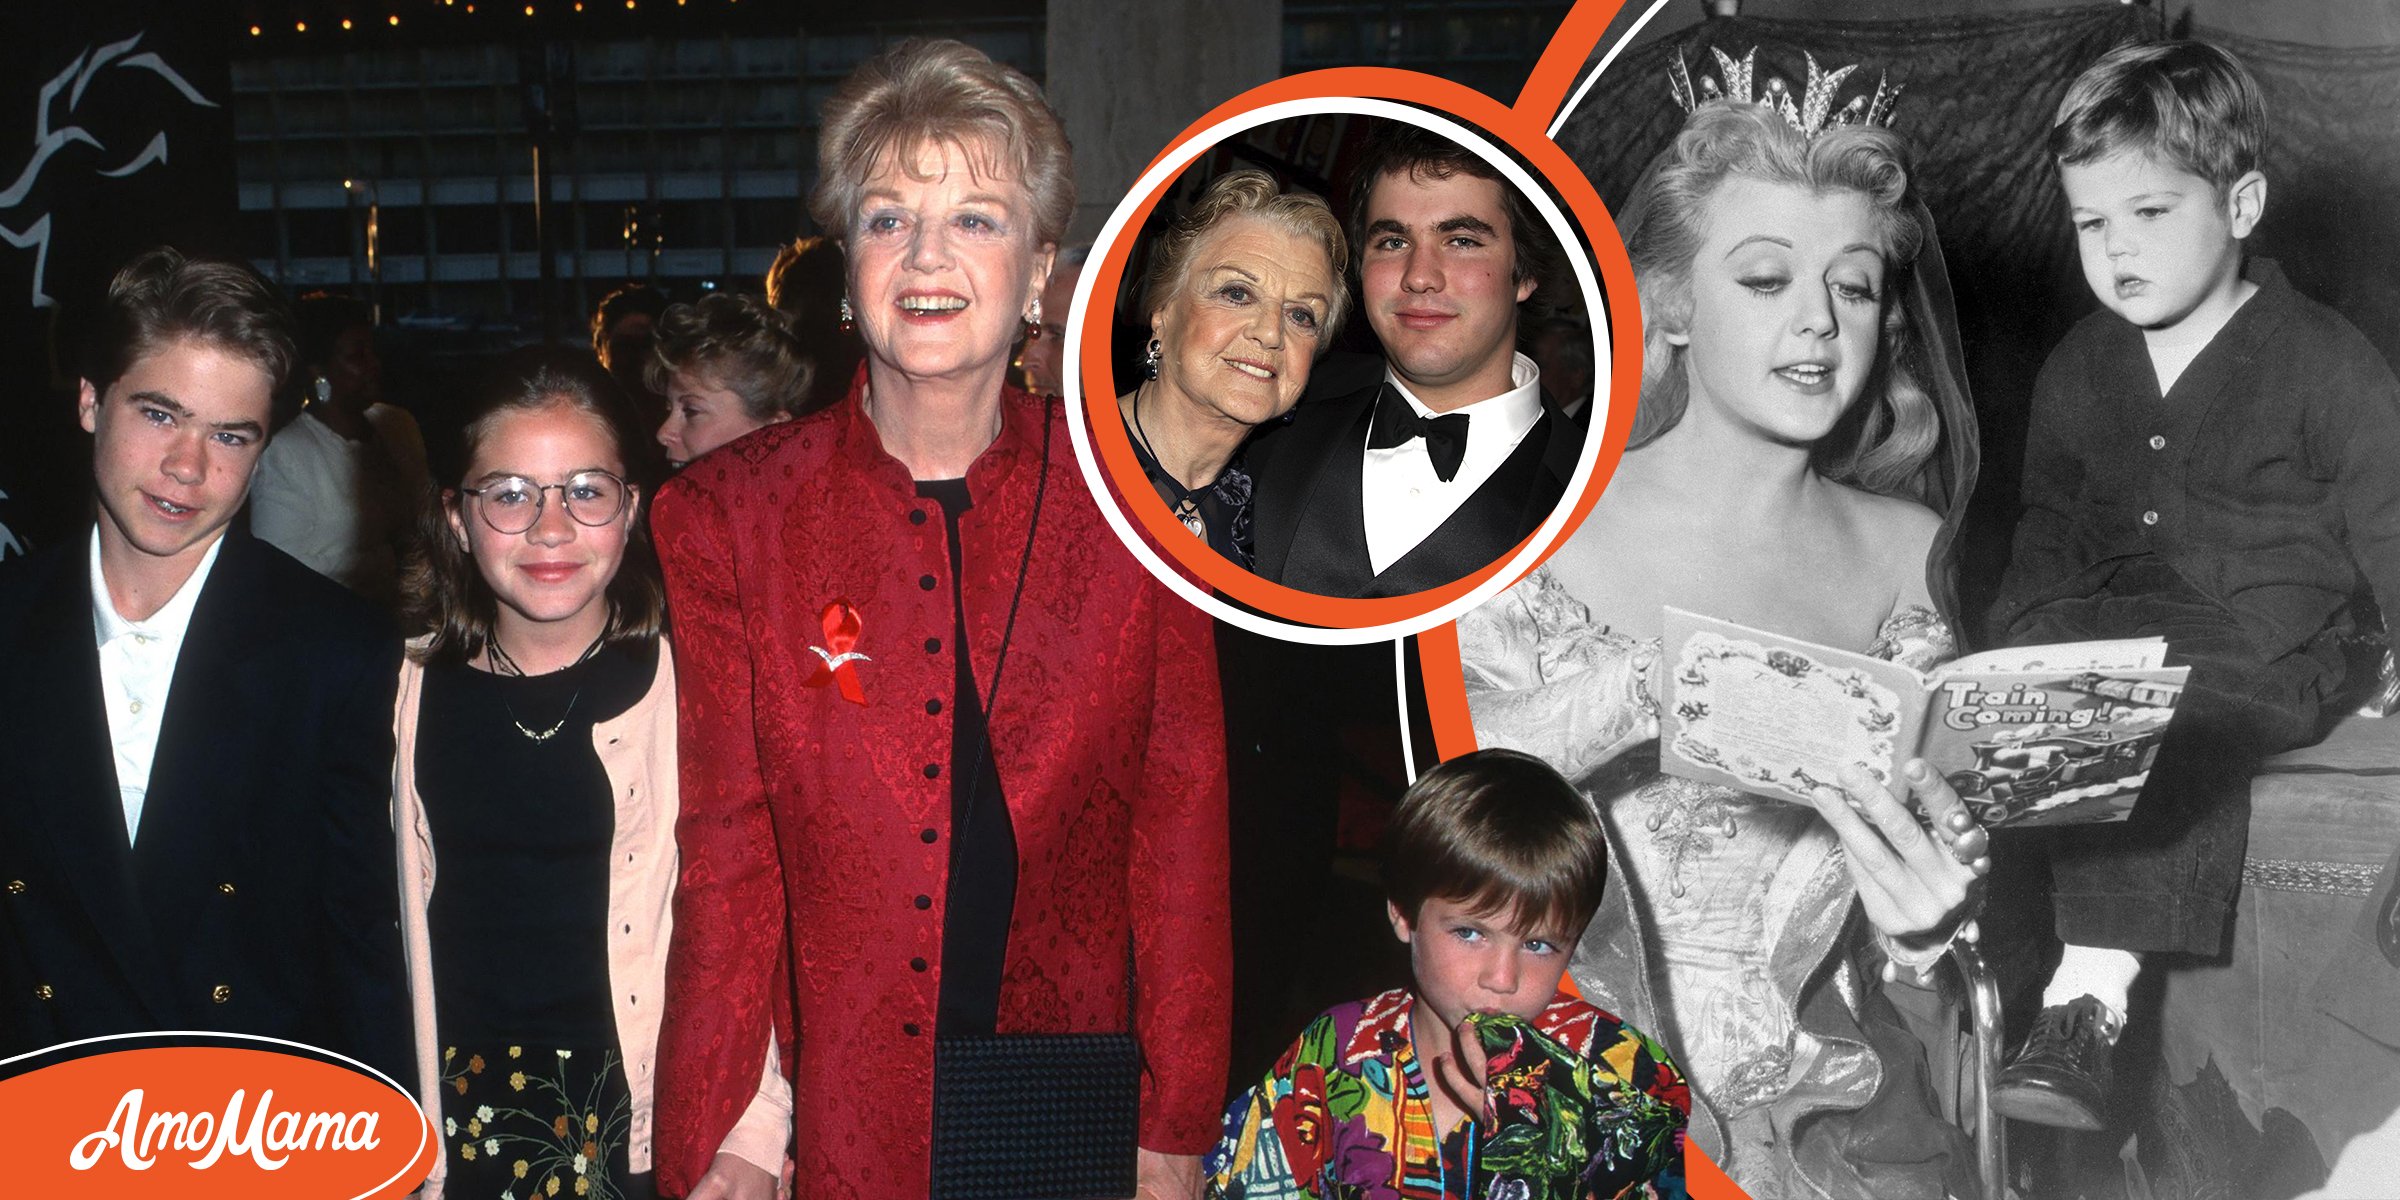 Angela Lansbury Dedicated Her Last 5 Years to Great Grand-Grandkids After Taking Pride in Grandson’s Wedding